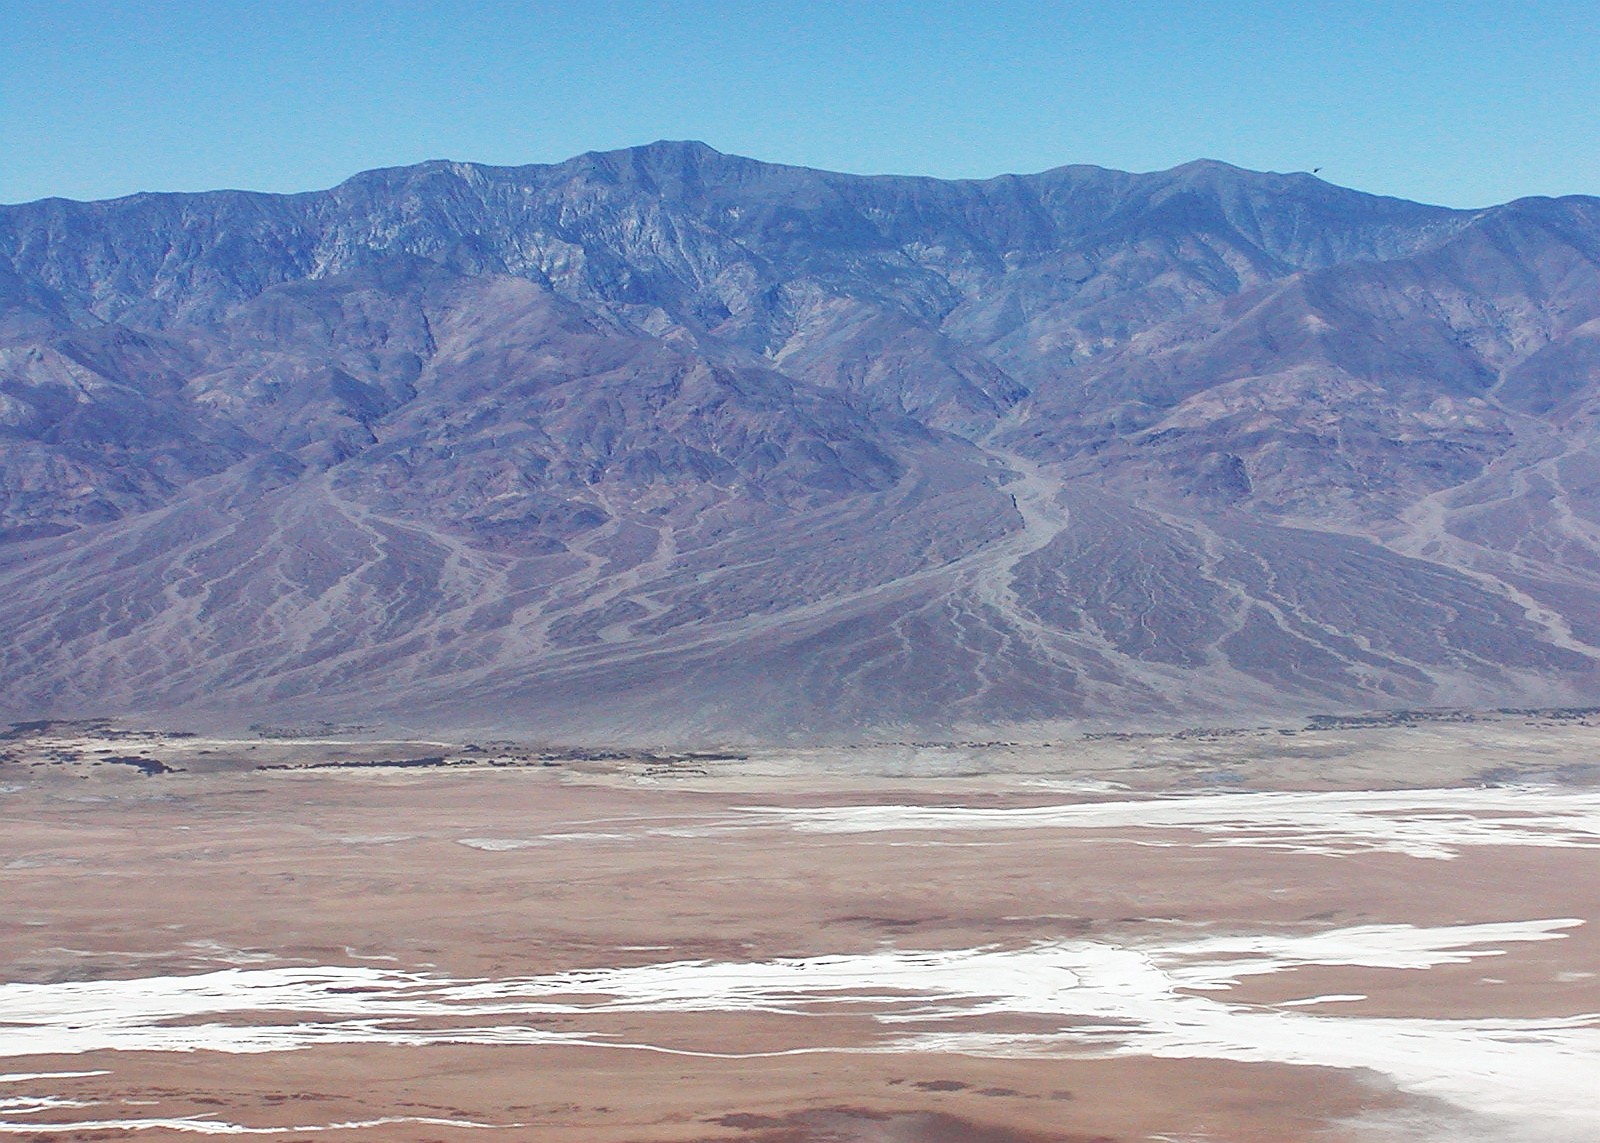 Death Valley with Telescope Peak